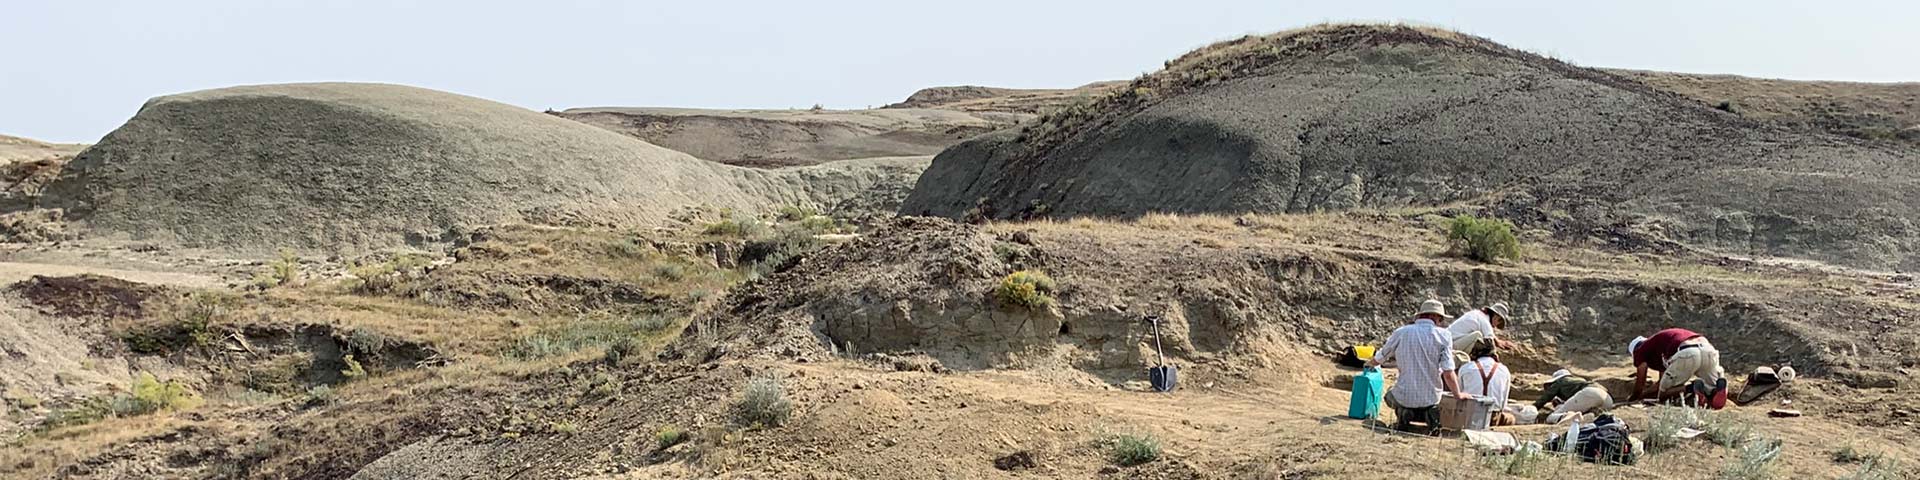 Visitors and paleontologists working on a fossil dig site in Grasslands National Park.